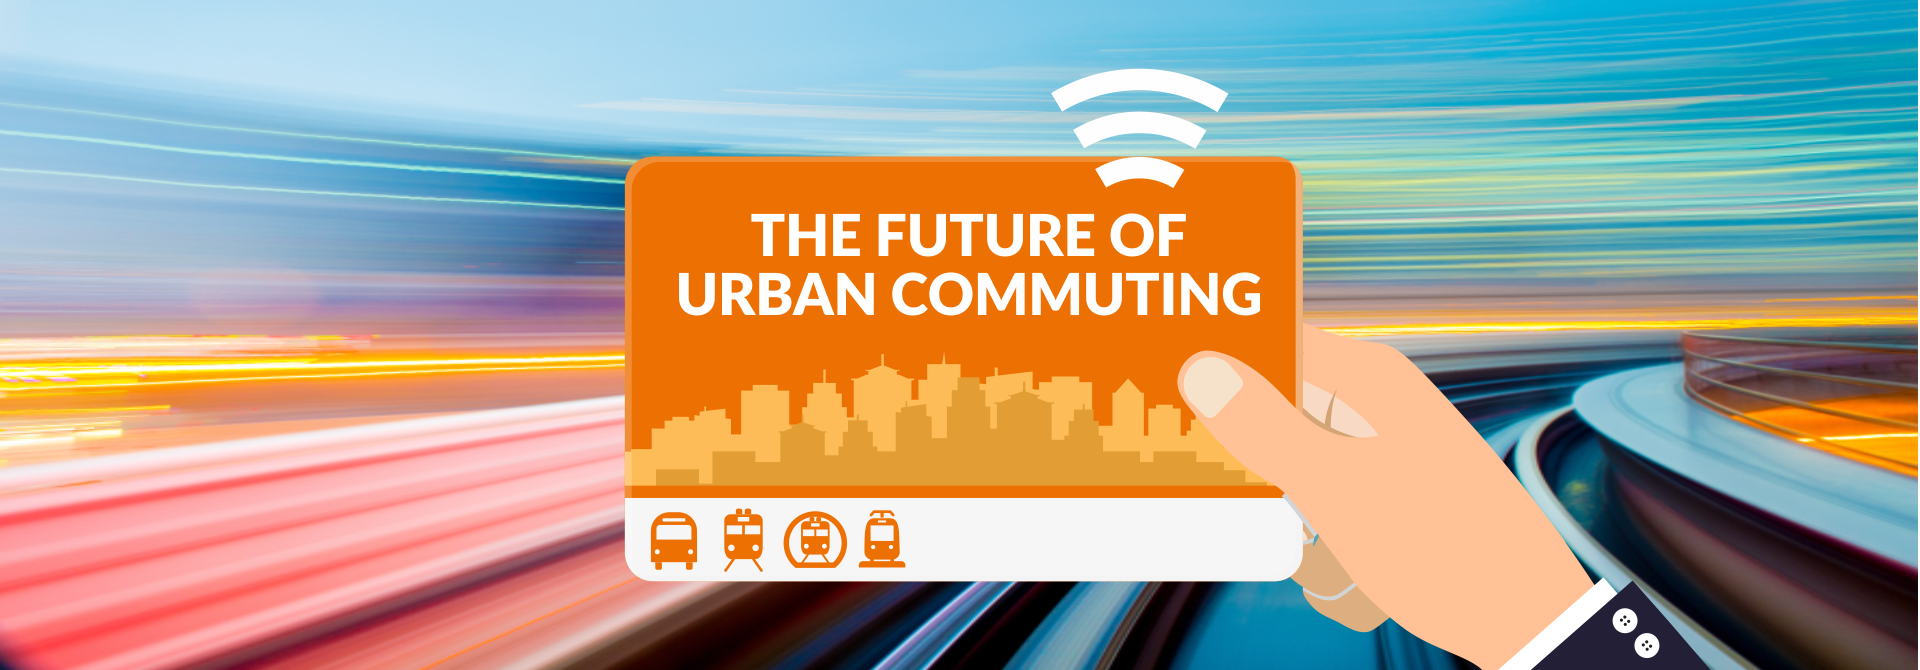 Future of Urban Commuting